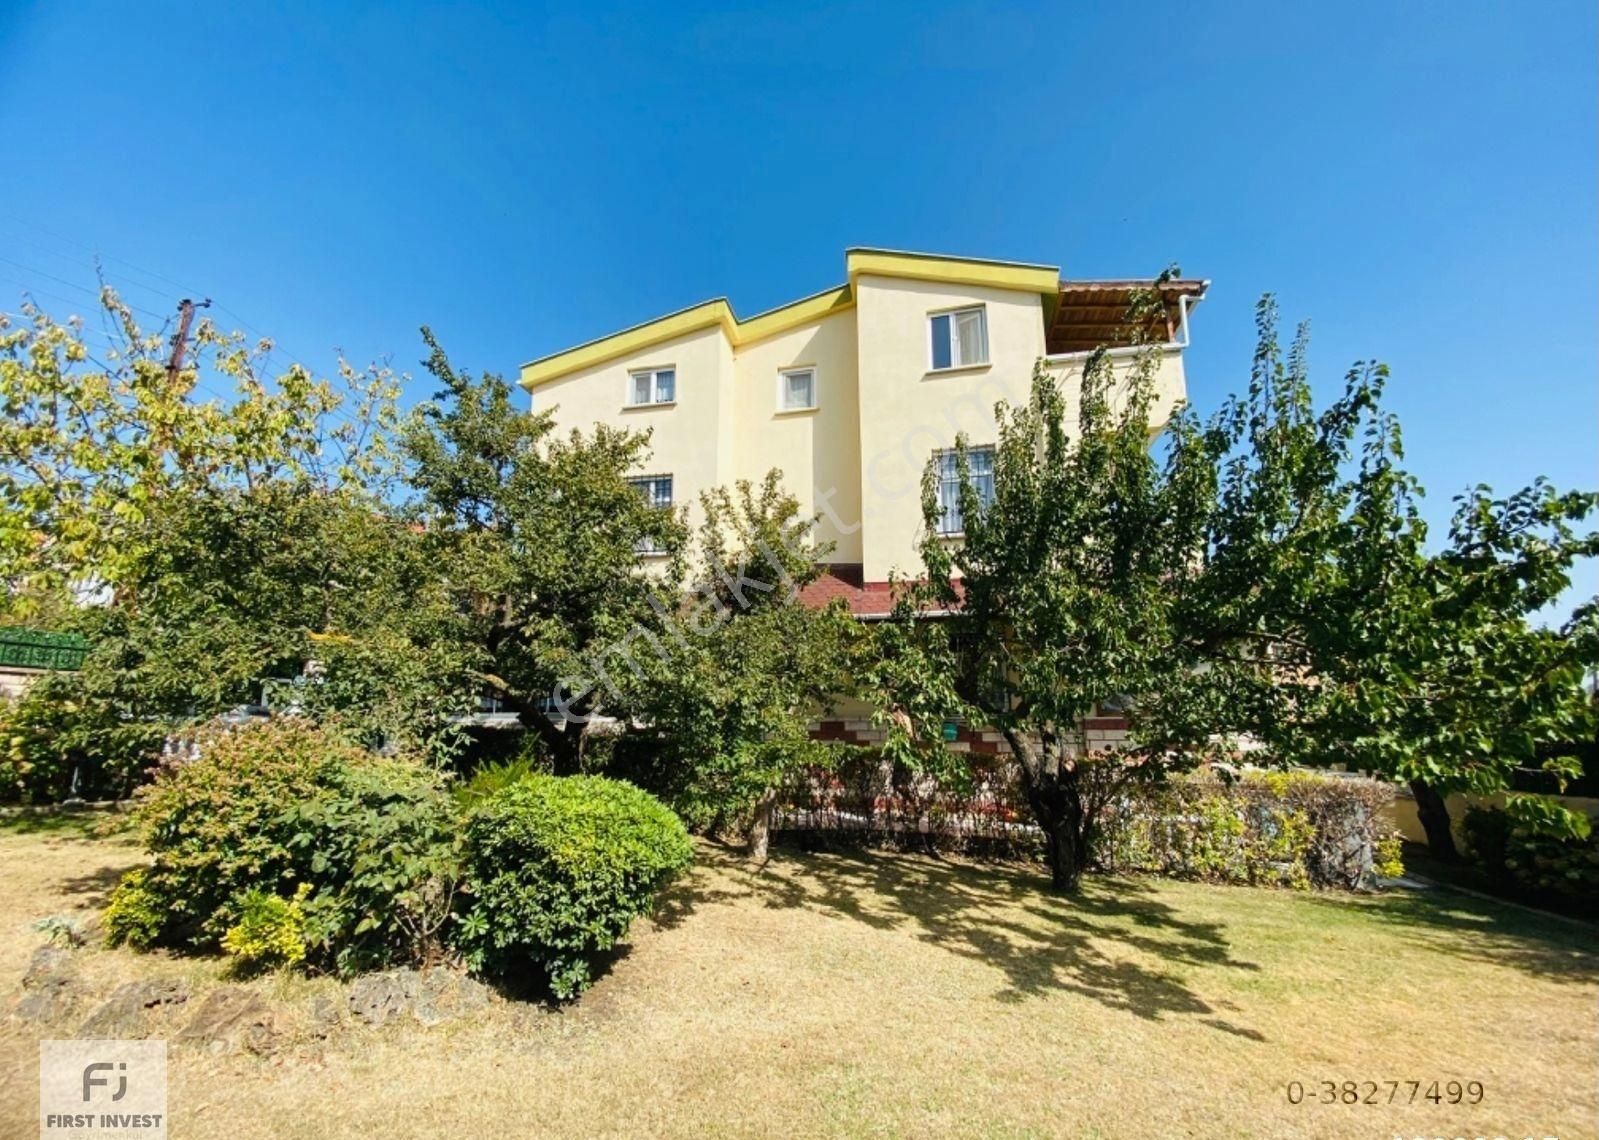 Marmaraereğlisi Kamaradere Satılık Villa Marmara Ereğlisi'nde 510 Metre Arsa İçinde 4+1 Müstakil Villa